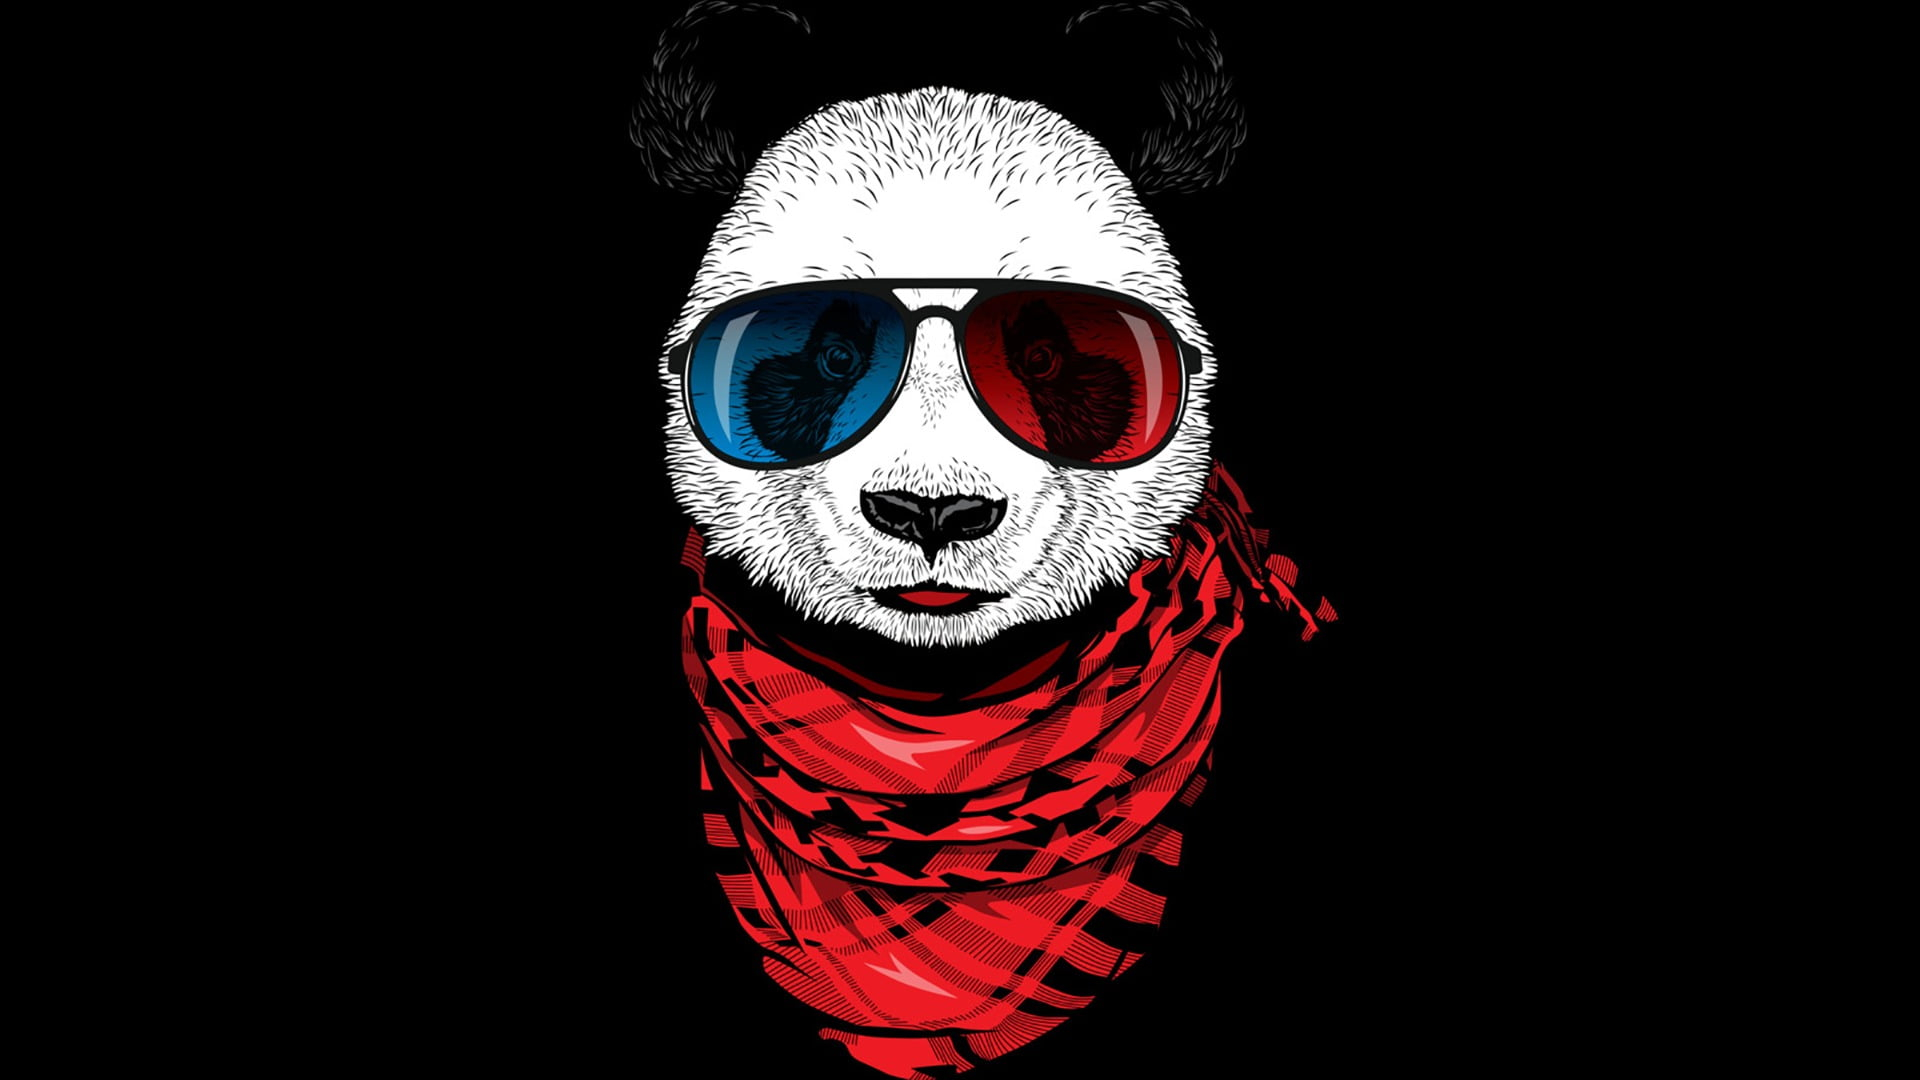 panda wallpapers free